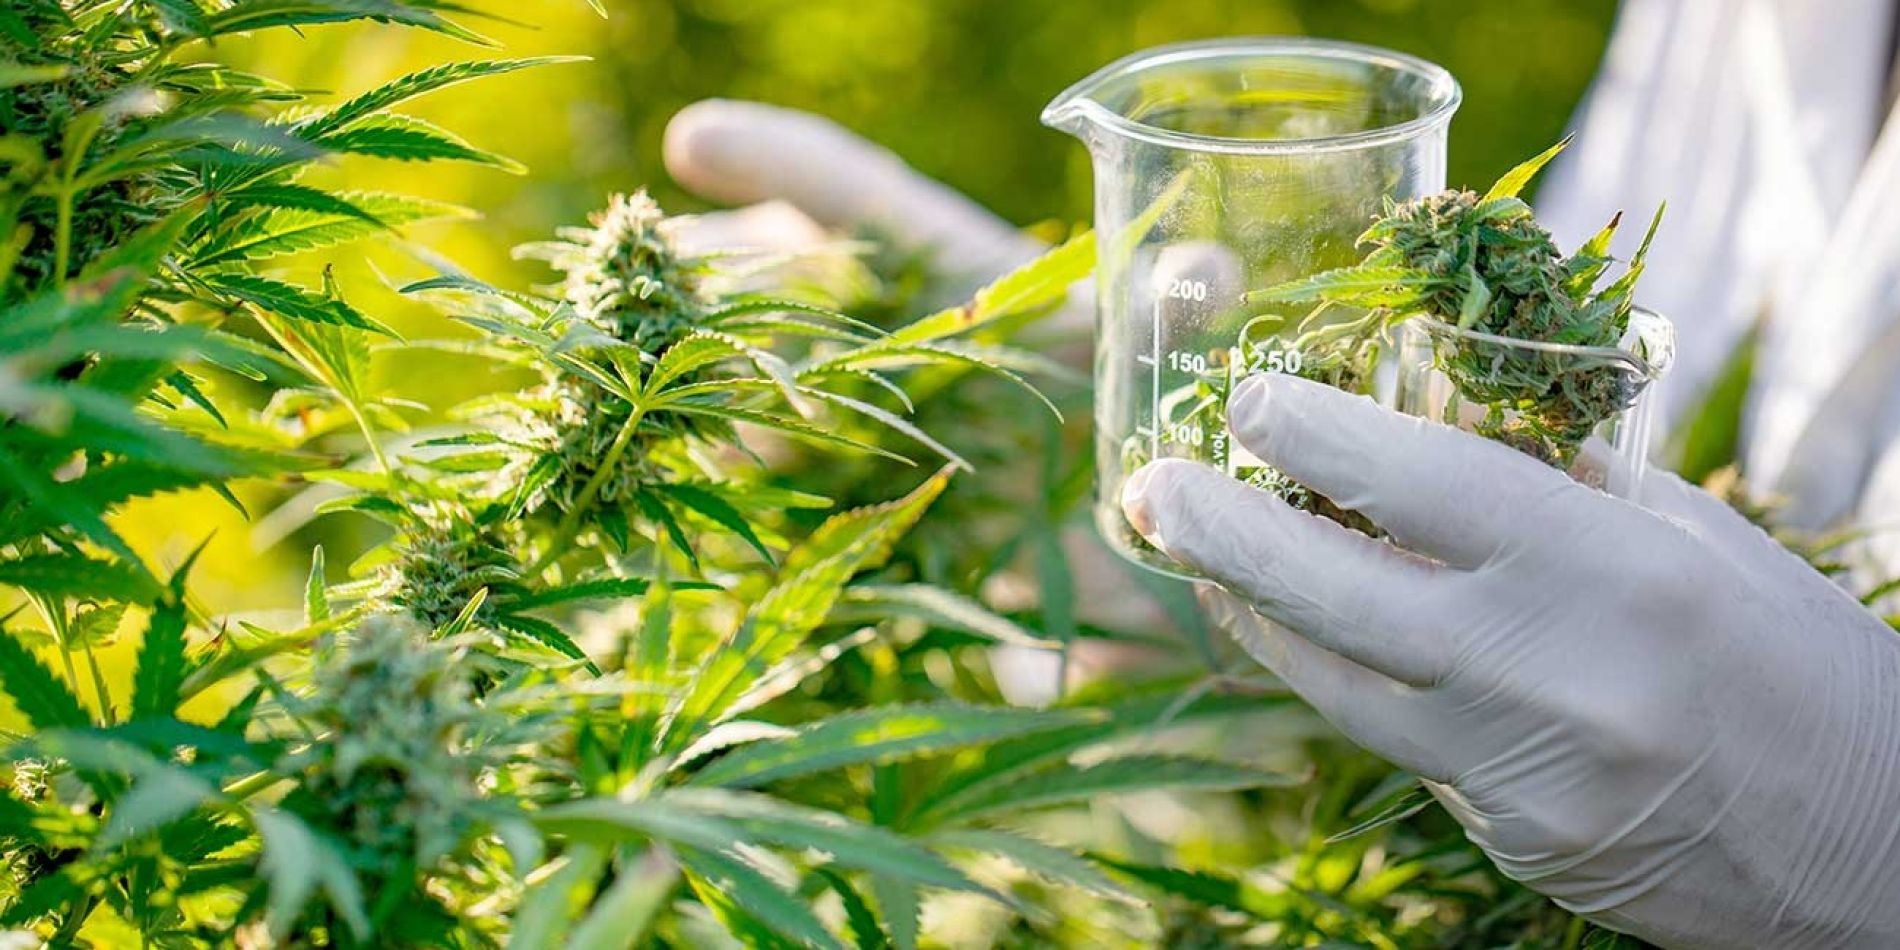 Diputados aprobó la ley que regula la industria del cannabis medicinal